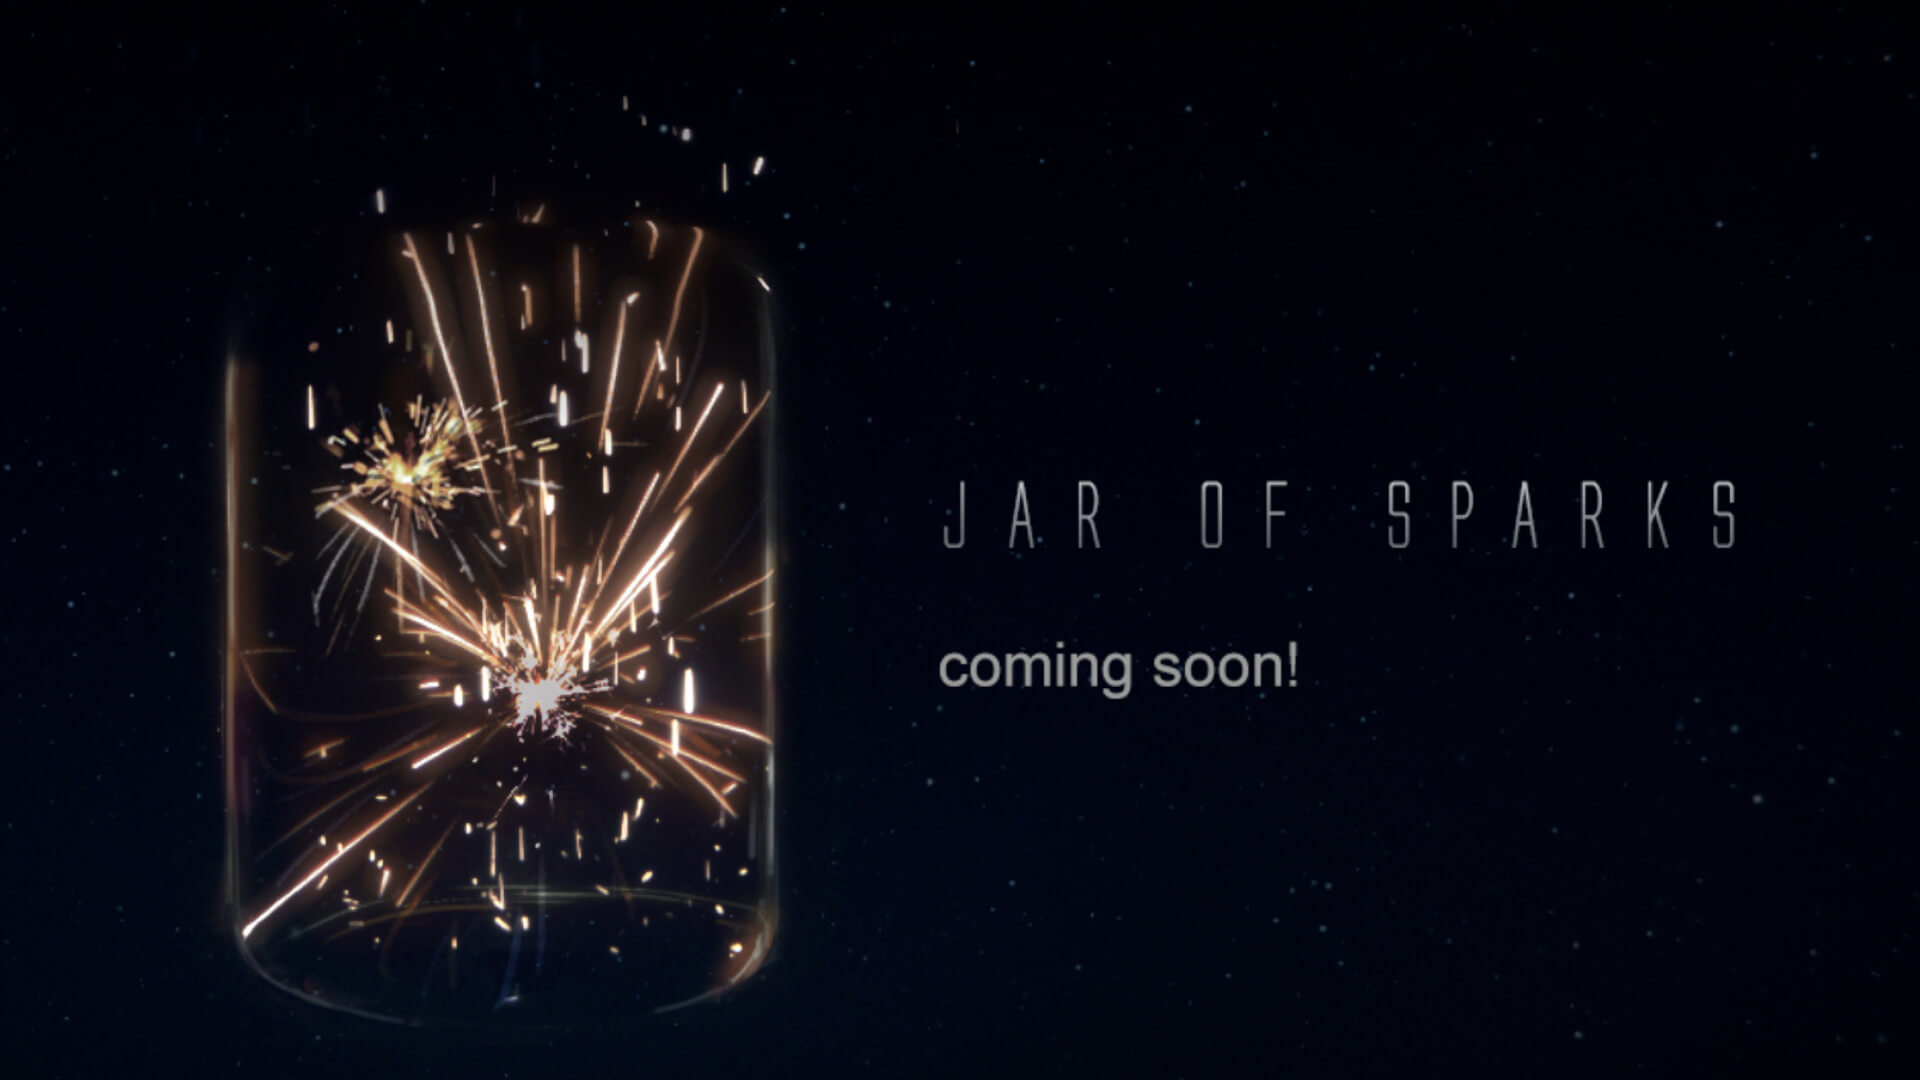 A teaser image of the new Jar of Sparks logo